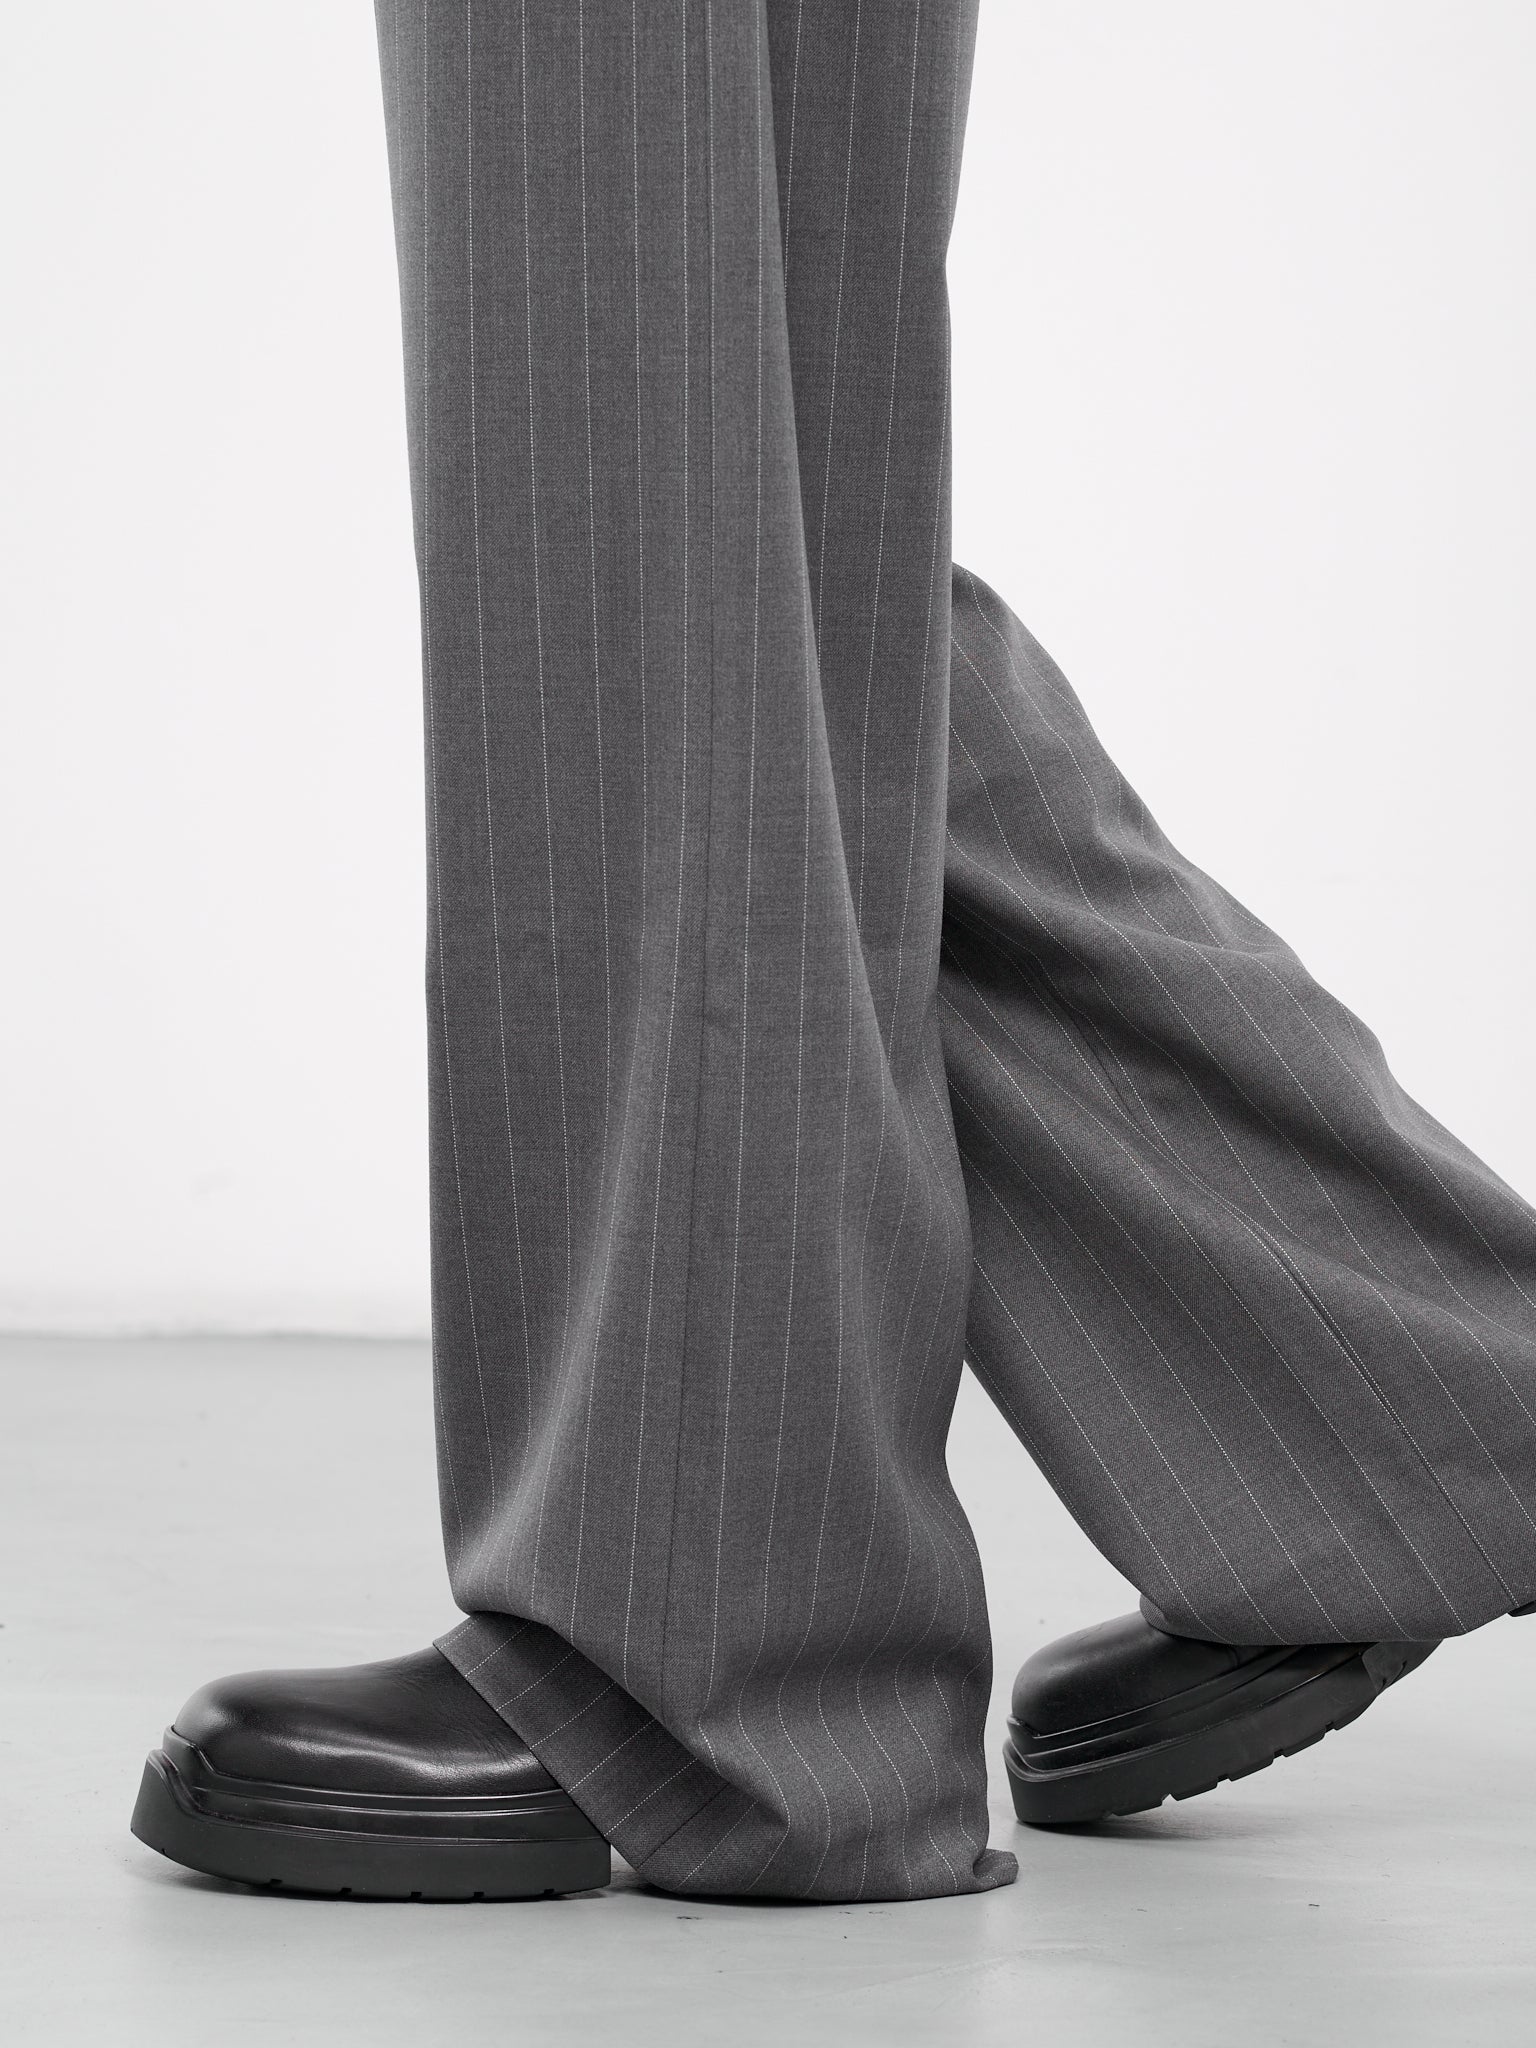 Elasticated Pinstripe Trousers (S1UPA02-GREY-PINSTRIPE)